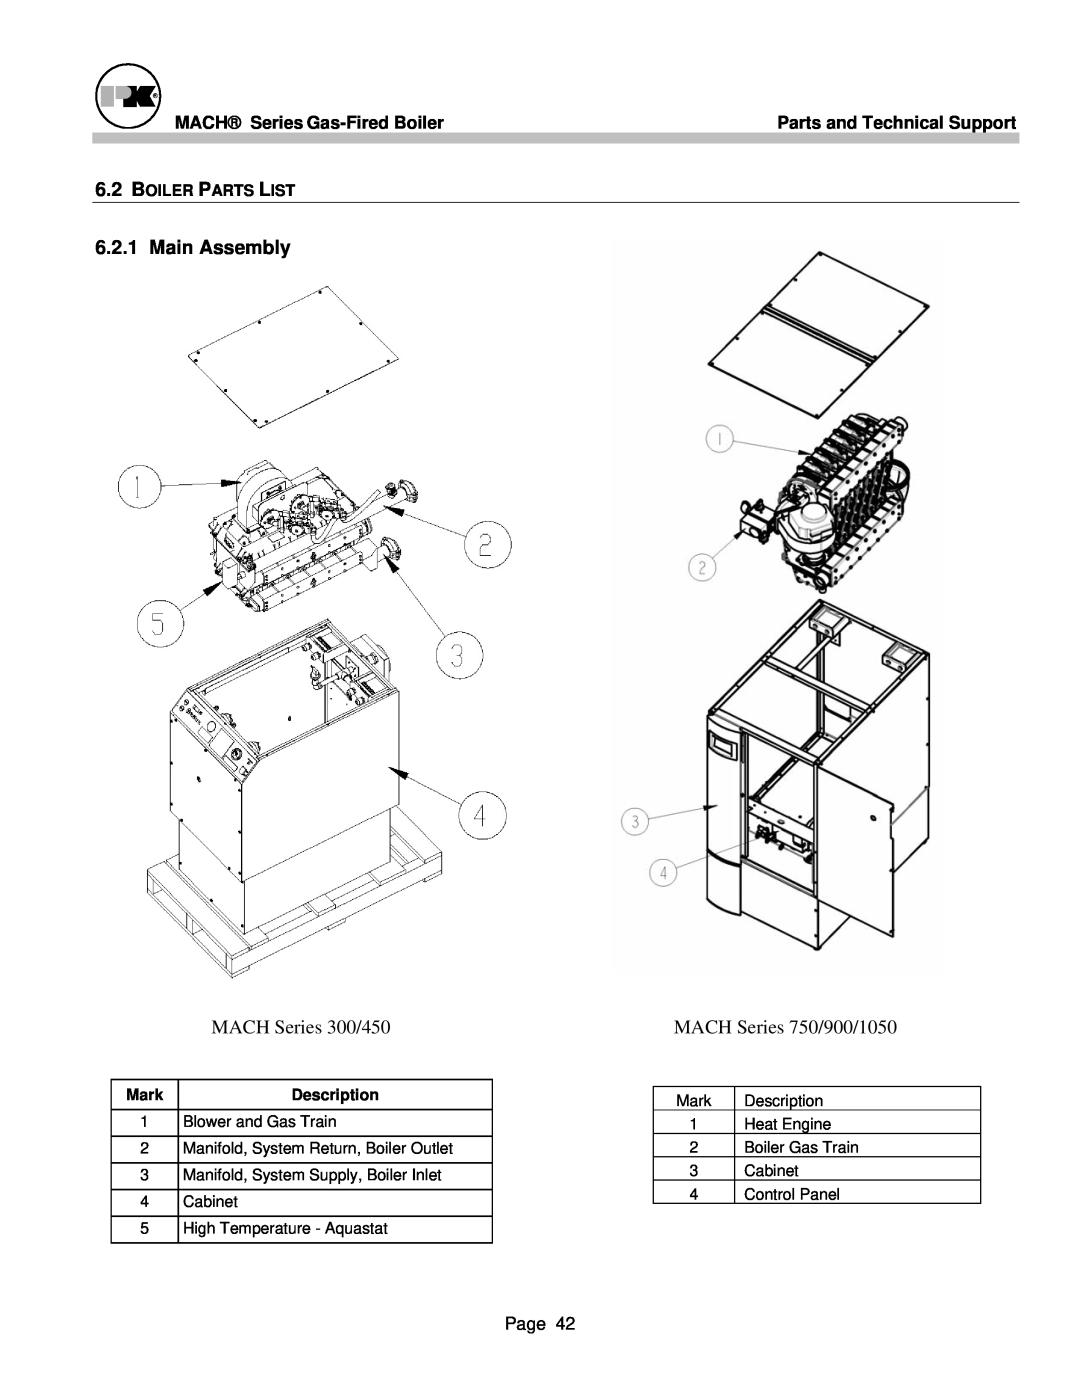 Patterson-Kelley MACH-05 manual Main Assembly, MACH Series 300/450, MACH Series 750/900/1050 